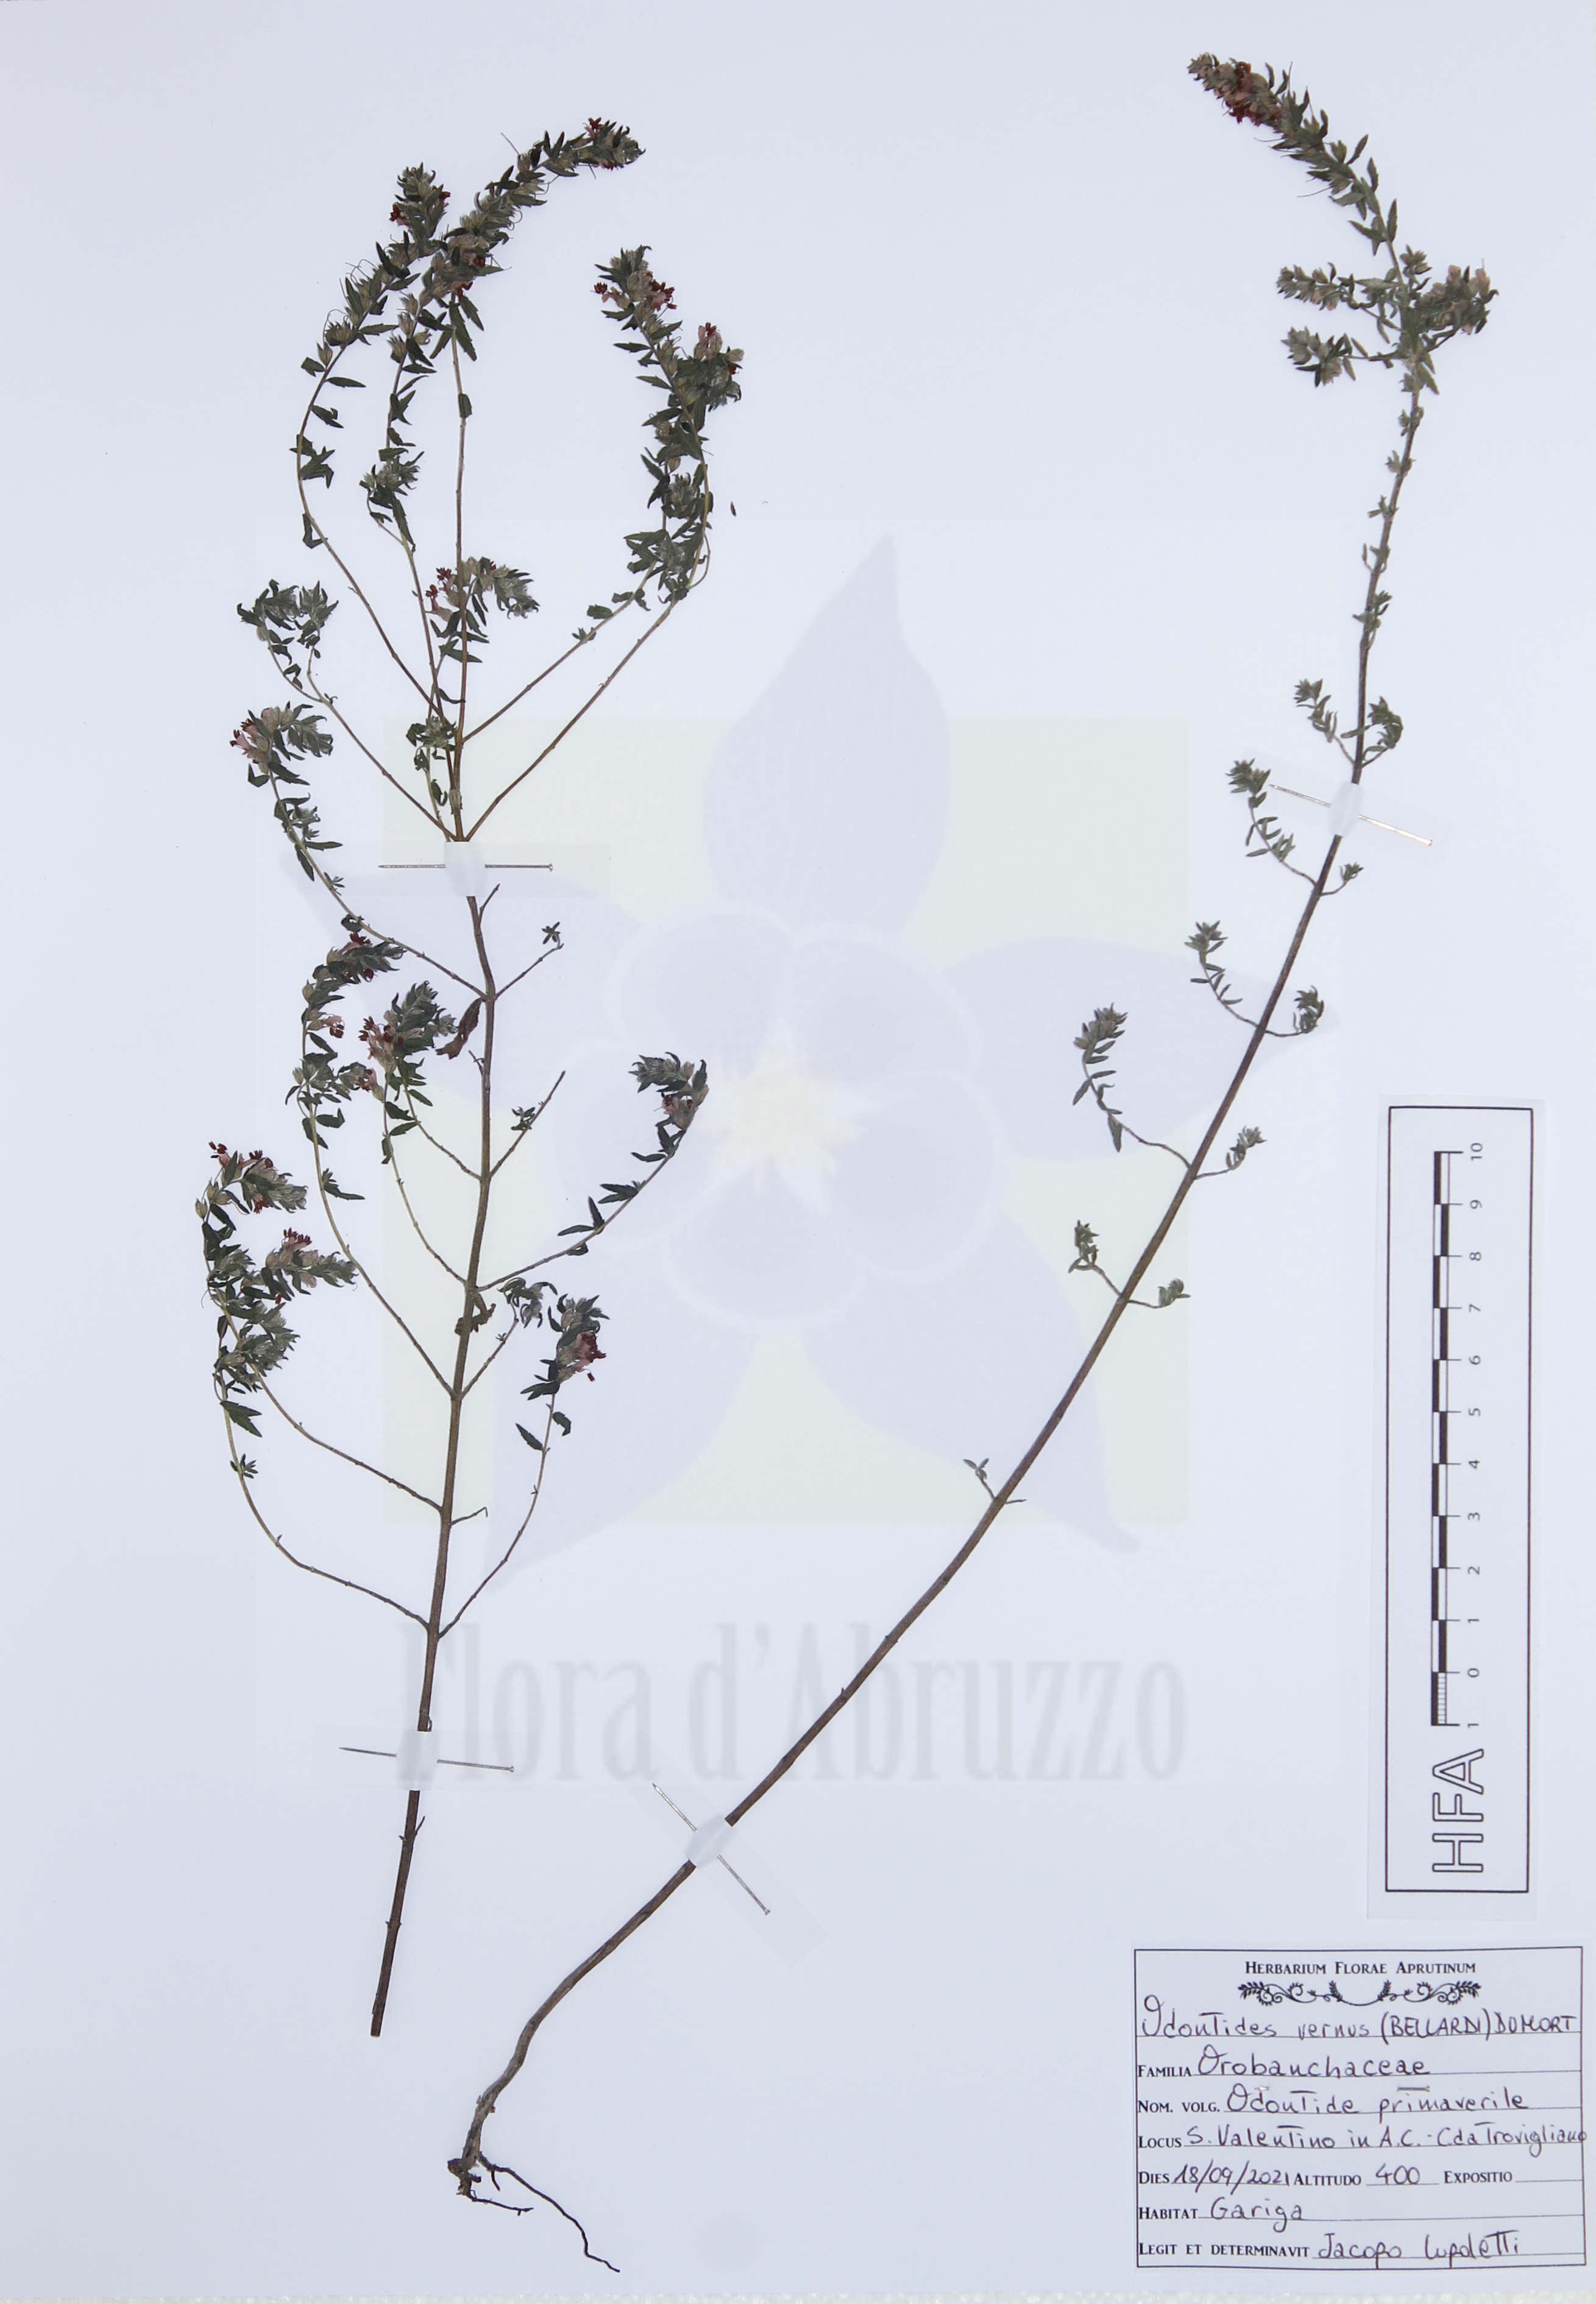 Odontites vernus (Bellardi) Dumort. subsp. vernus